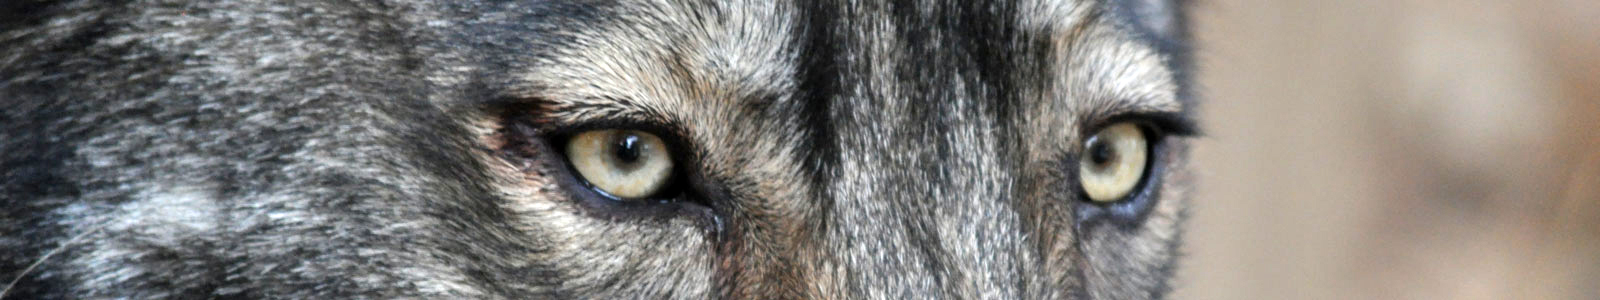 Texas Wolfdog Project History Header Image